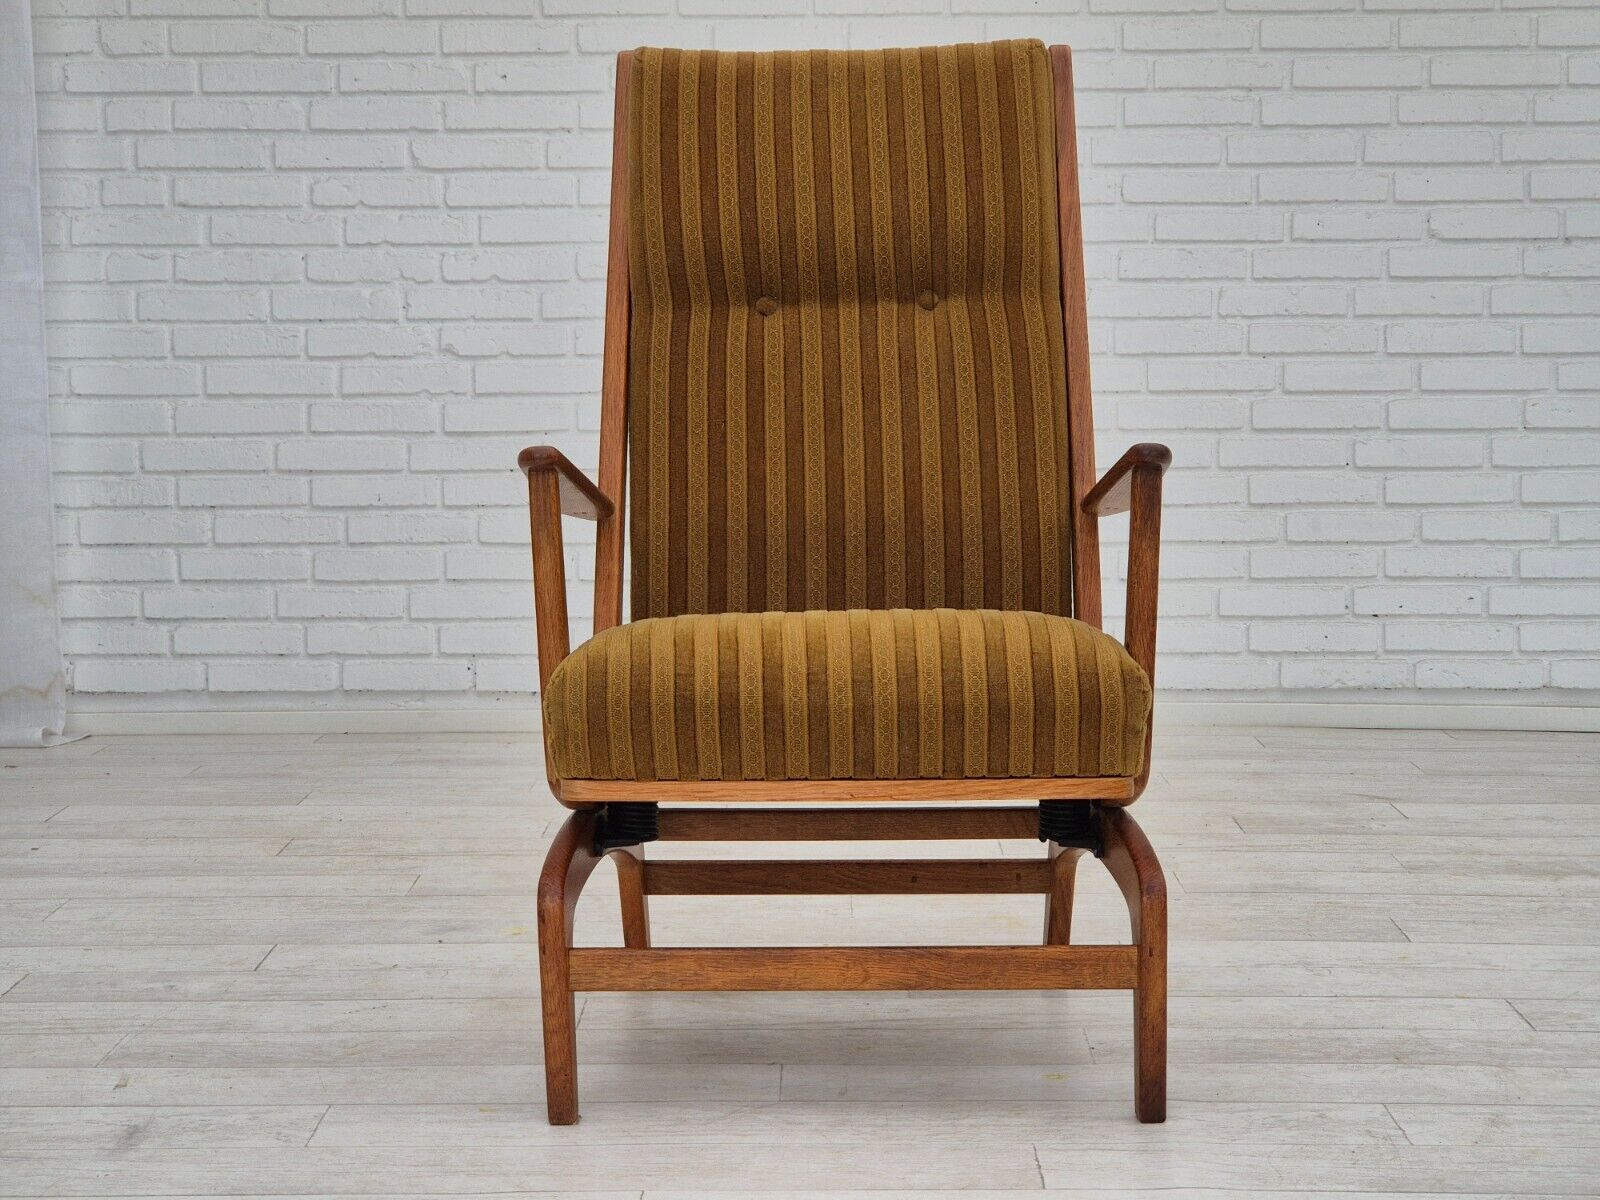 1960s Danish design oak wood rocking chair with footstool furniture wool